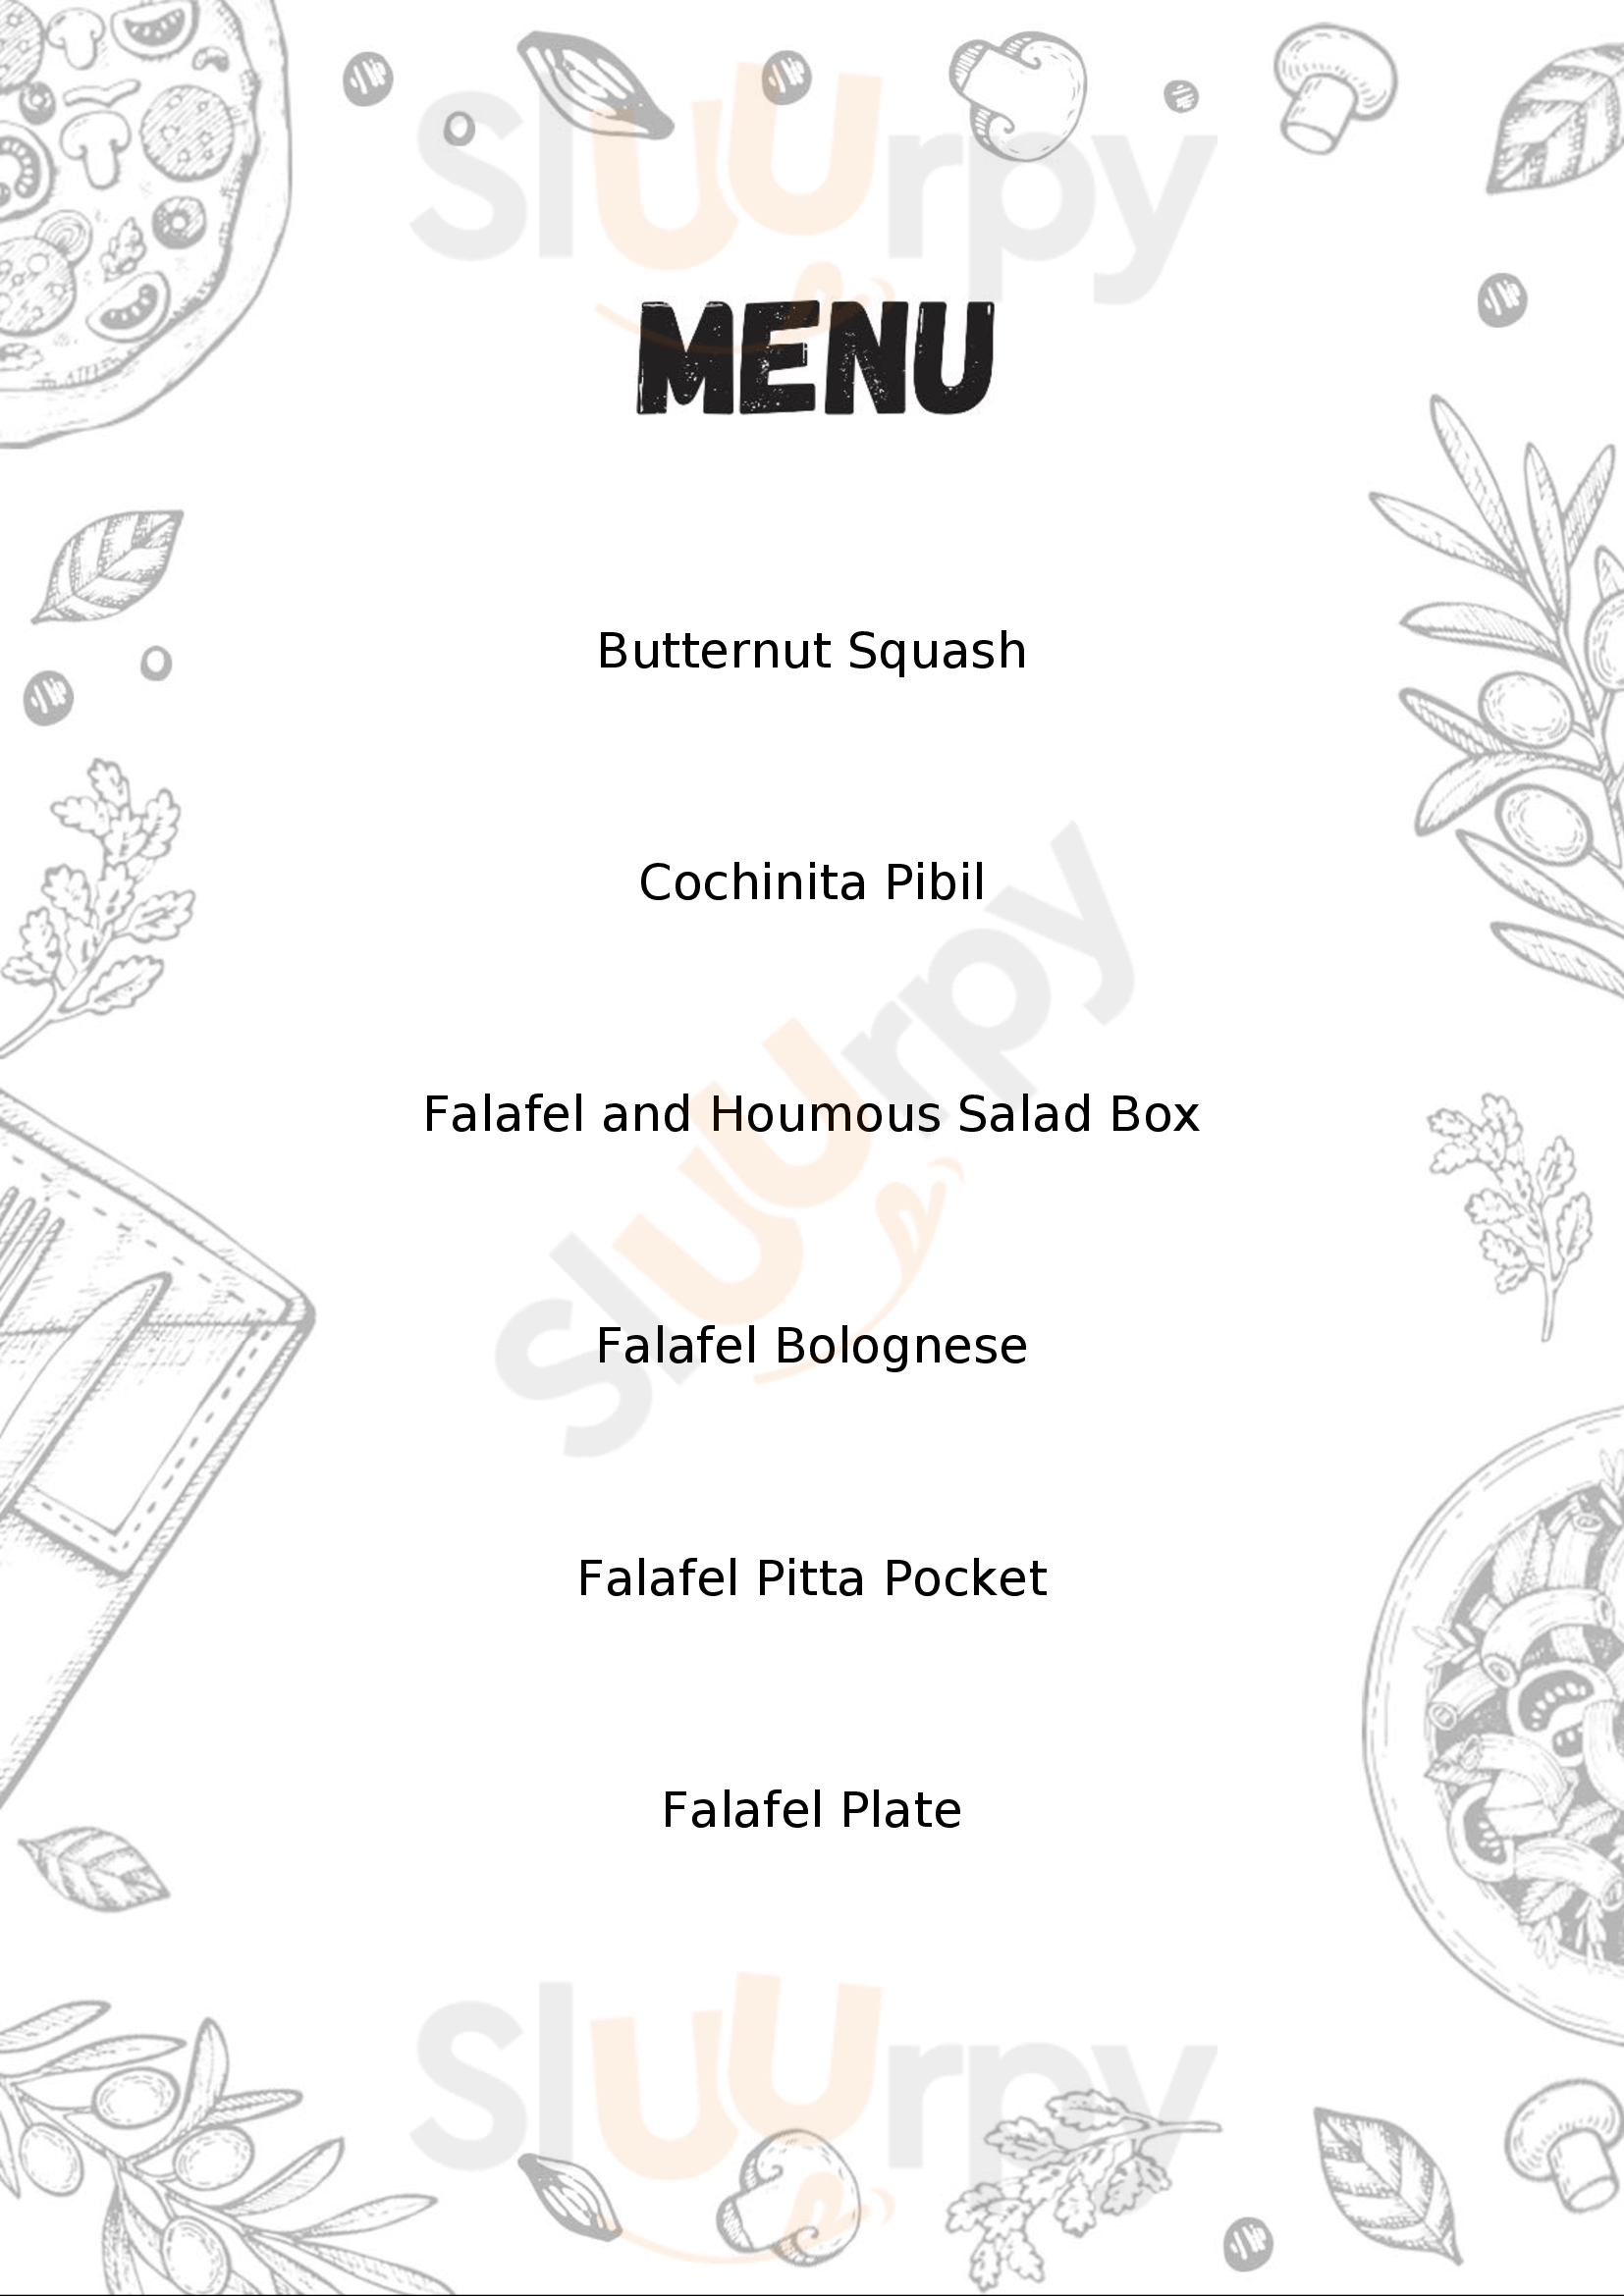 Smorl's Houmous Falafel & Salad Bar Brighton Menu - 1